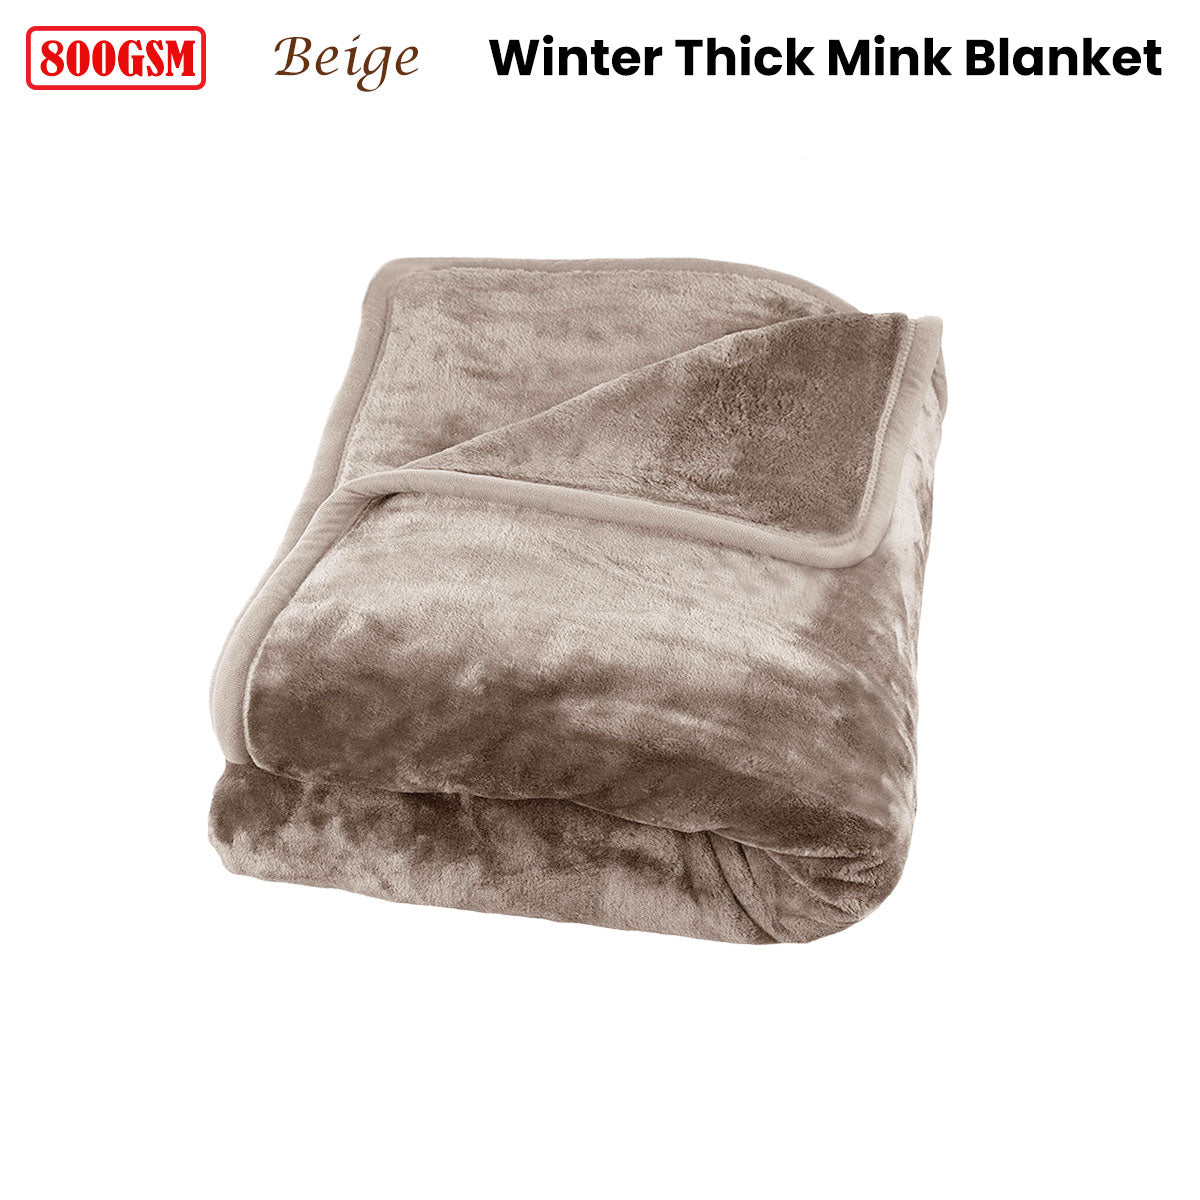 800GSM Luxury Winter Thick Mink Blanket Beige King